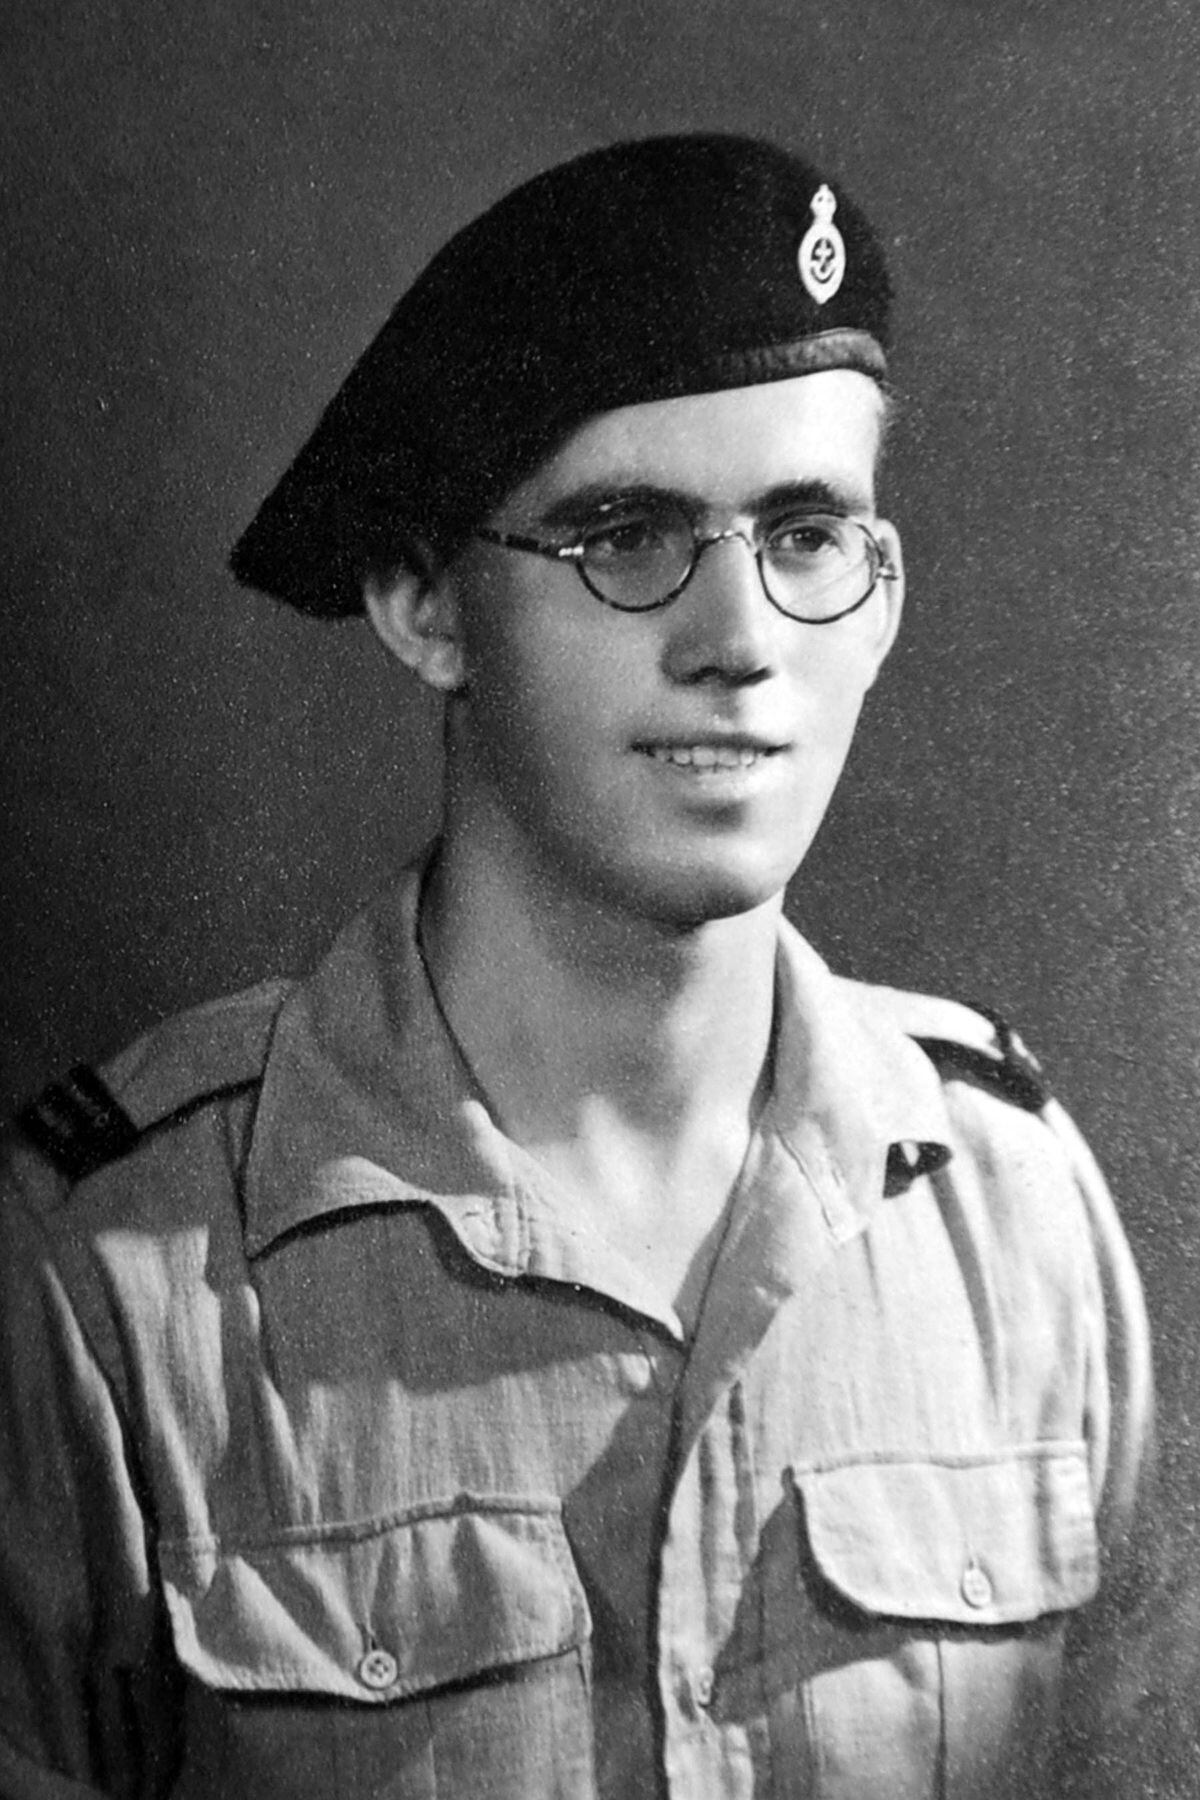 Mr Stevenson in Cairo, aged 18, in 1943